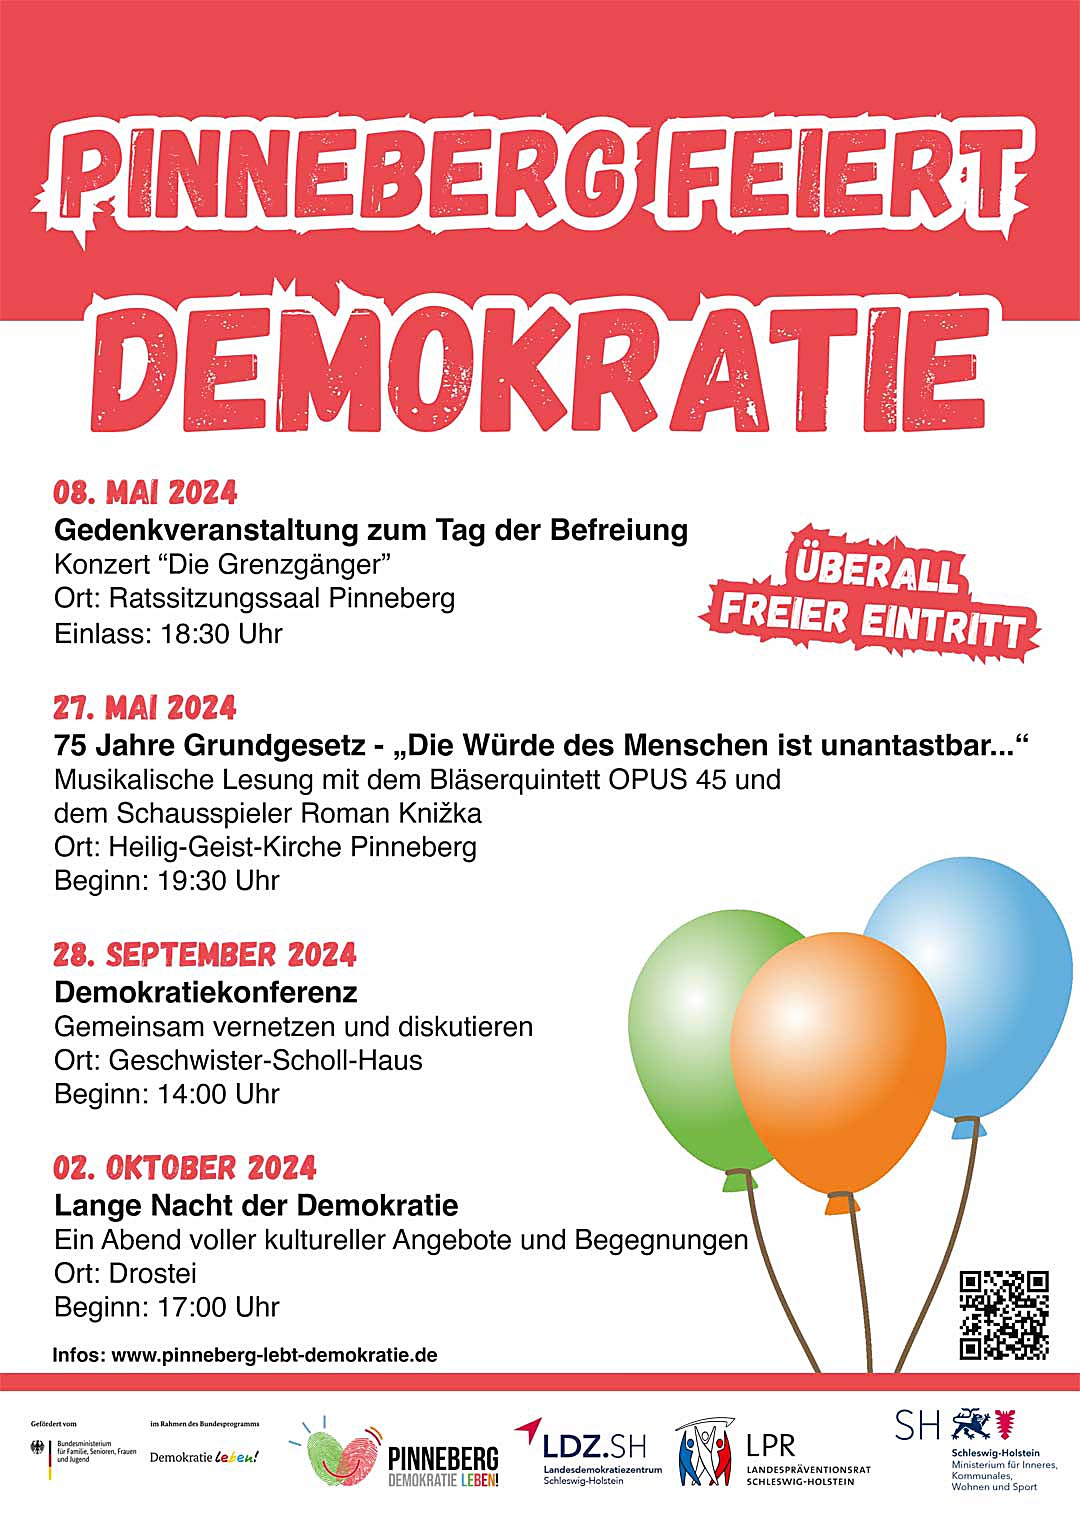 Plakat „Pinneberg feiert Demokratie” mit diversen Veranstaltungshinweisen